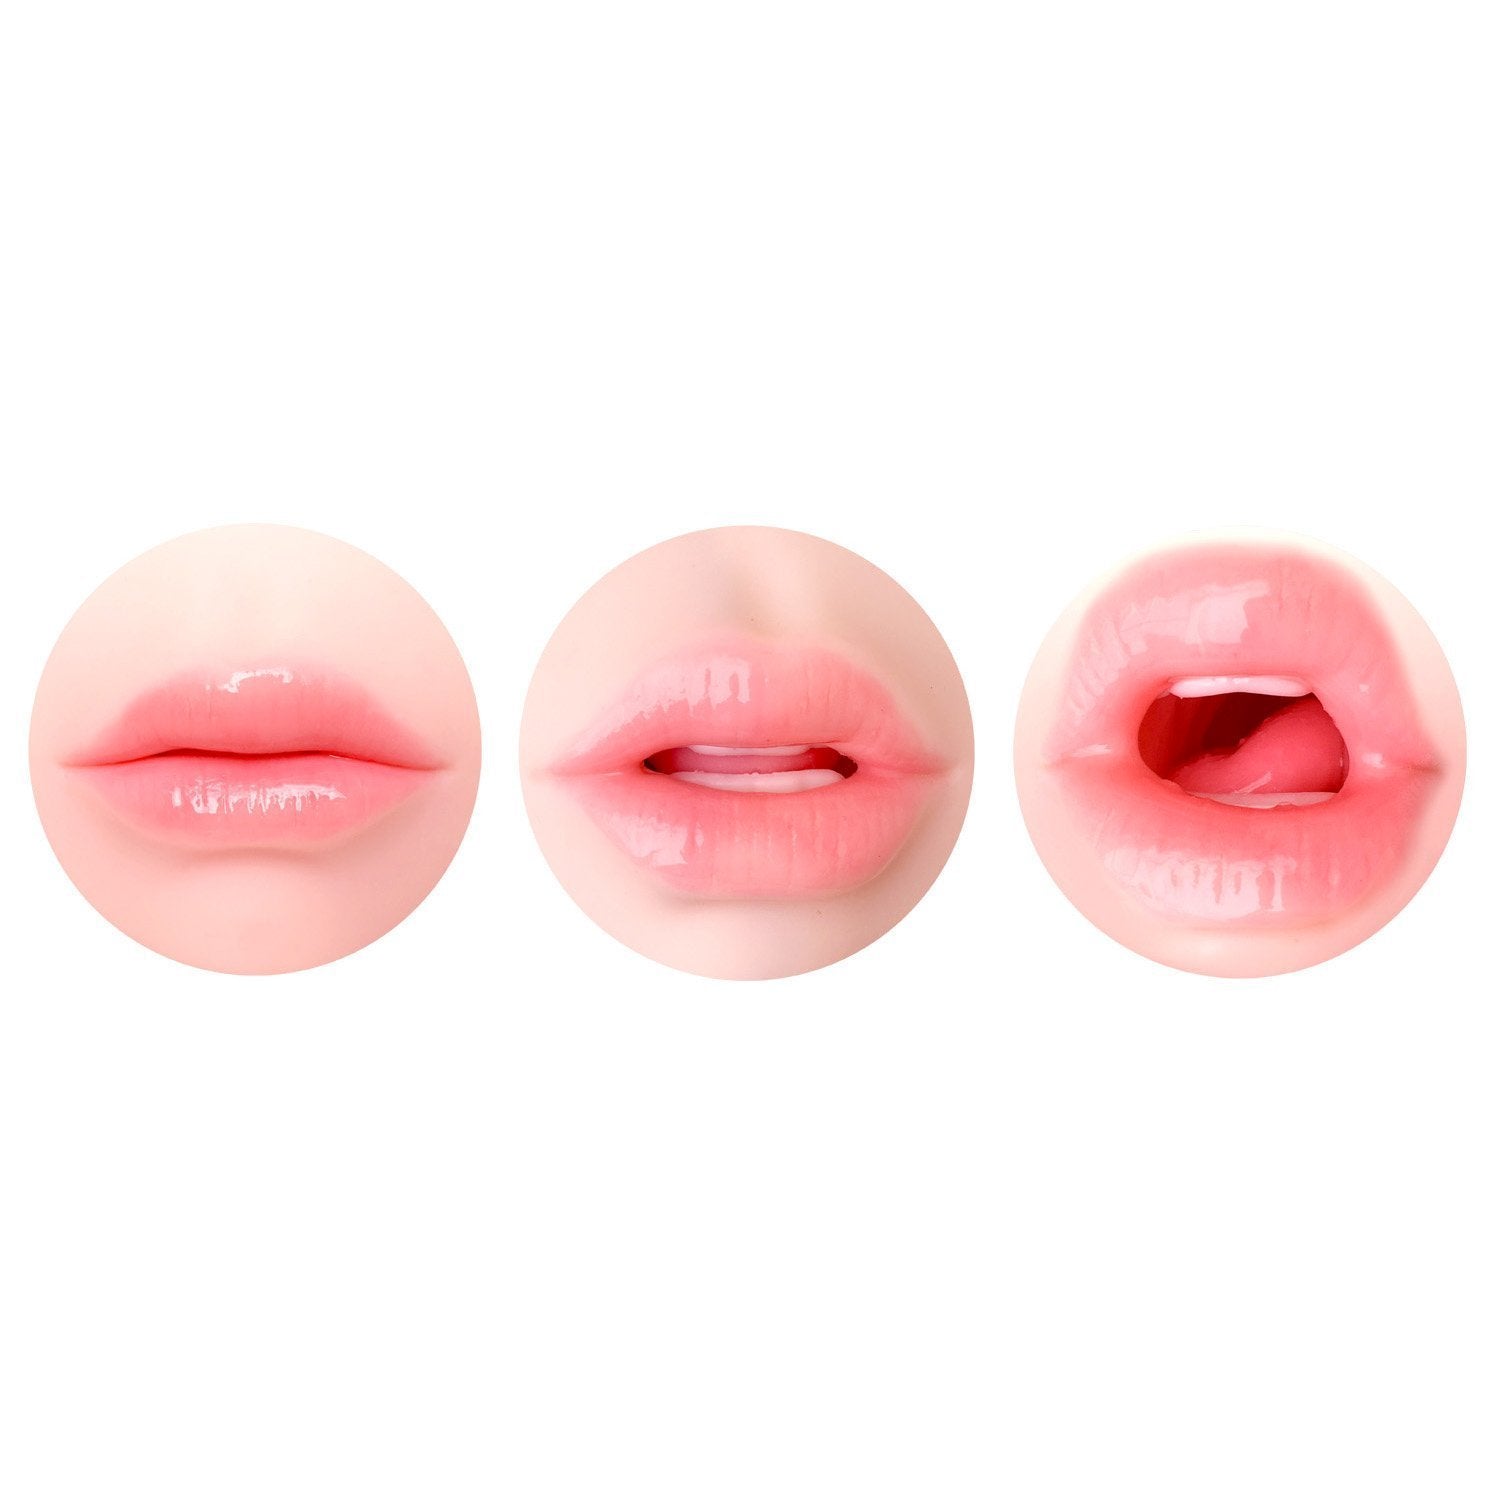 ONDO! - NUPU Mouth Masturbator (Beige) -  Masturbator Mouth (Non Vibration)  Durio.sg